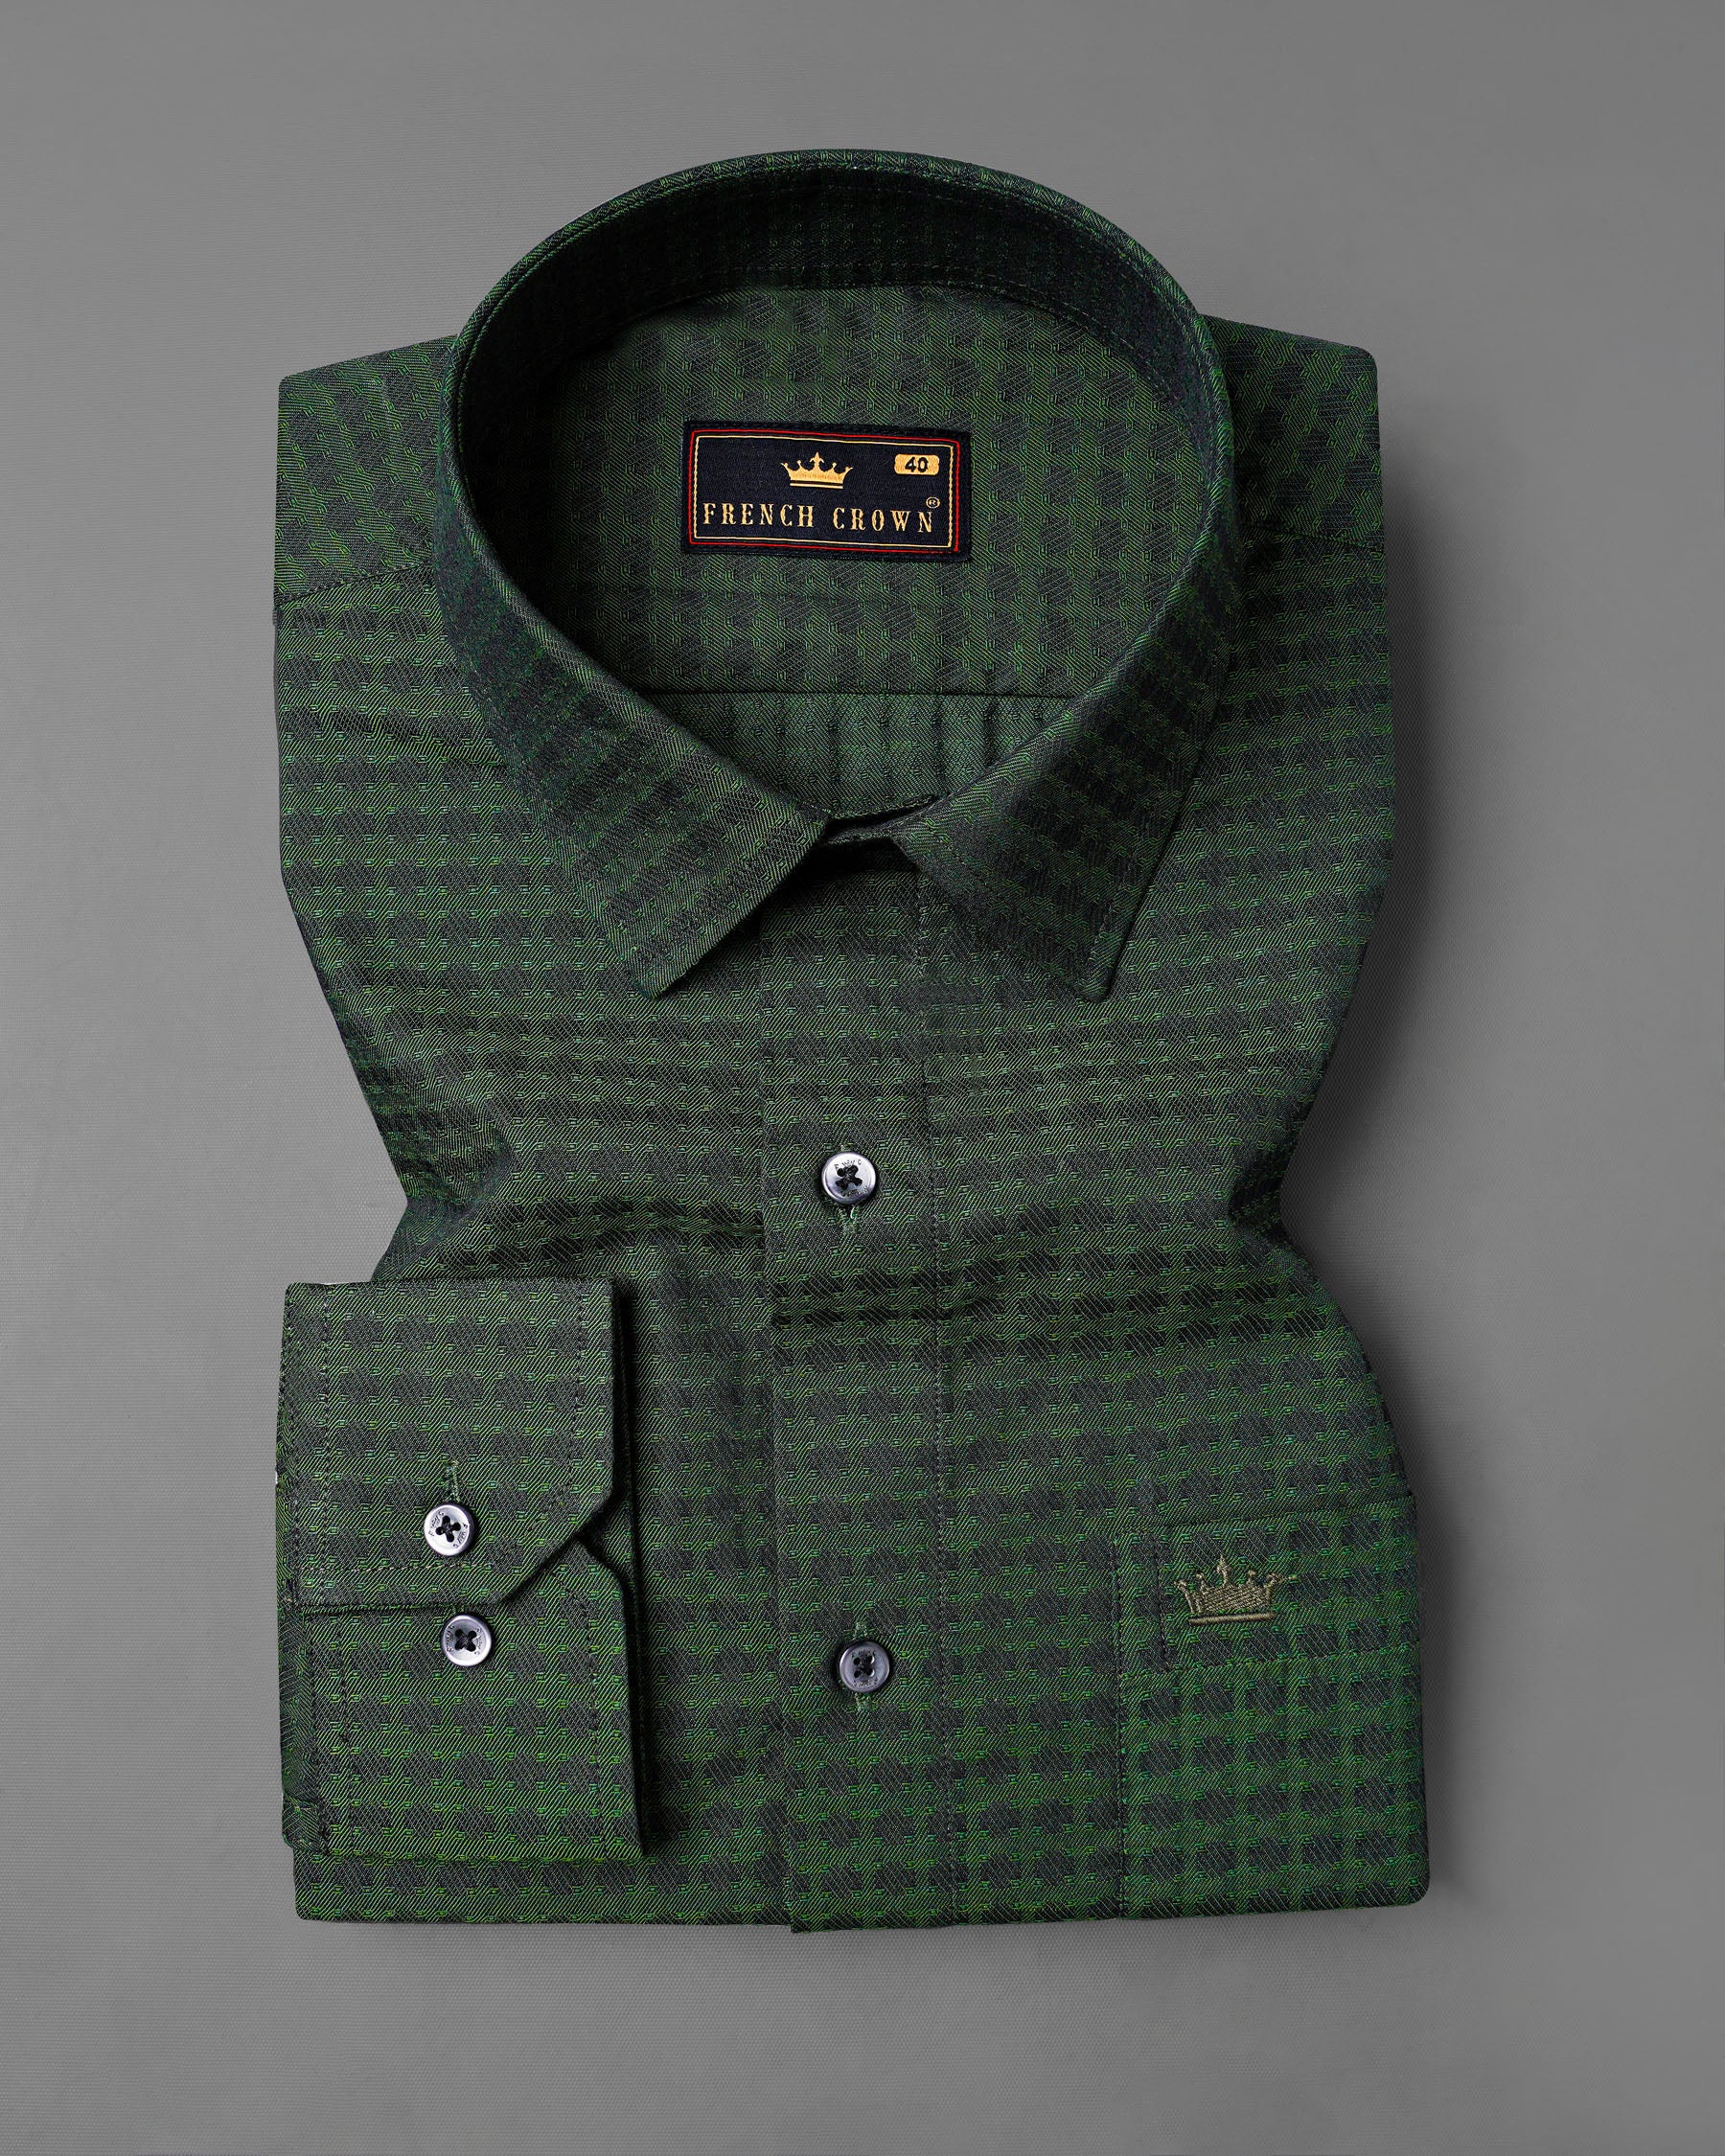 Axolotl Green and Jade Black Dobby Textured Premium Giza Cotton Shirt 7906-BLK-38, 7906-BLK-H-38, 7906-BLK-39, 7906-BLK-H-39, 7906-BLK-40, 7906-BLK-H-40, 7906-BLK-42, 7906-BLK-H-42, 7906-BLK-44, 7906-BLK-H-44, 7906-BLK-46, 7906-BLK-H-46, 7906-BLK-48, 7906-BLK-H-48, 7906-BLK-50, 7906-BLK-H-50, 7906-BLK-52, 7906-BLK-H-52